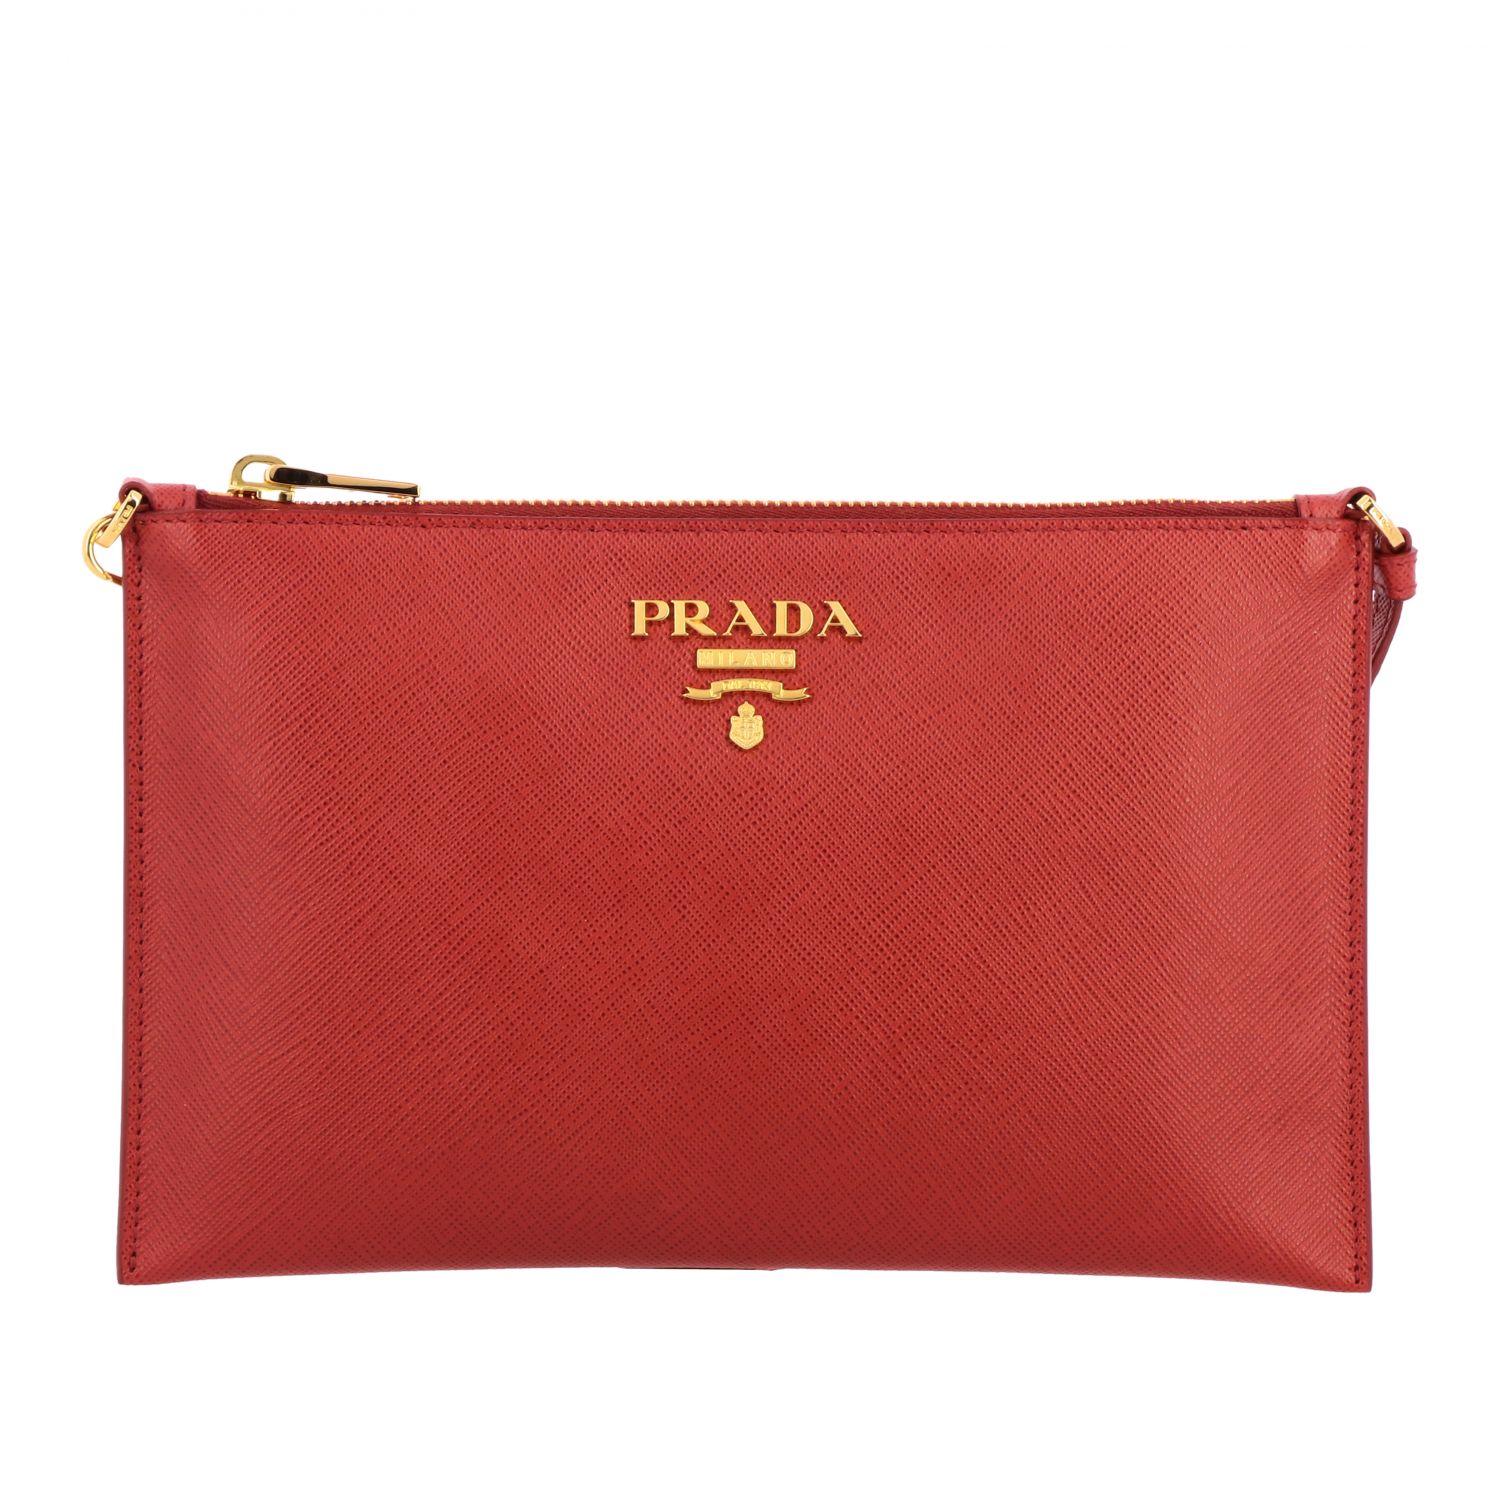 PRADA: clutch bag in Saffiano leather with metallic logo - Red | Clutch ...